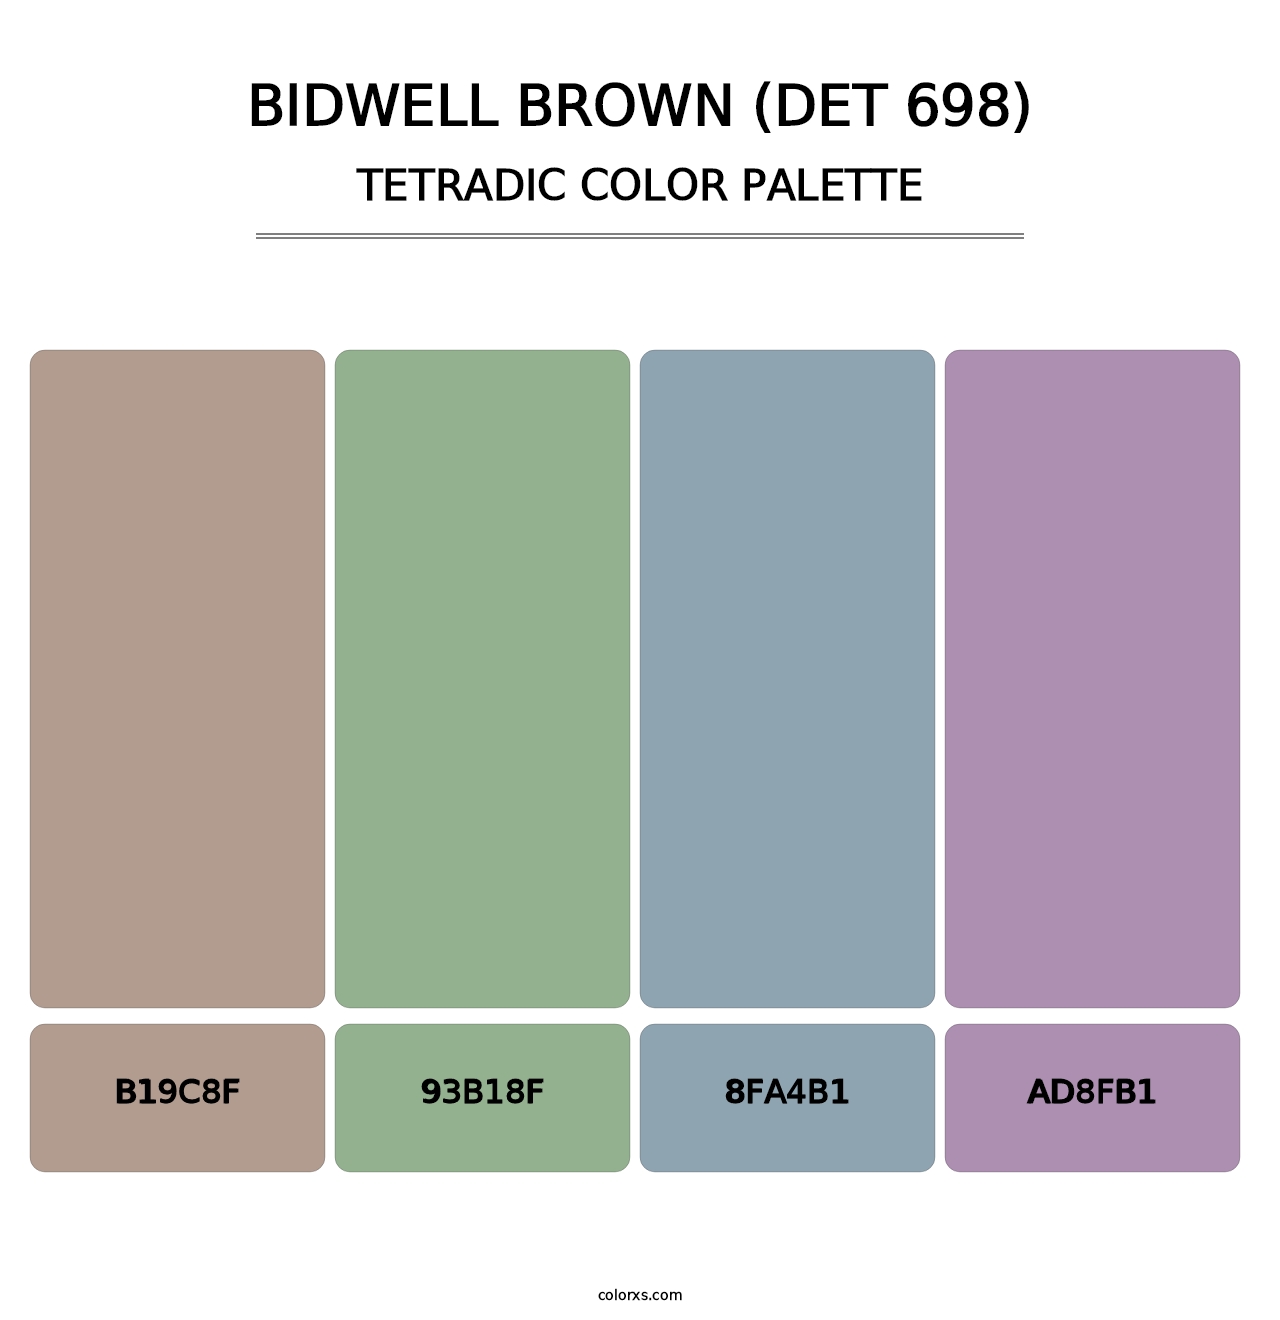 Bidwell Brown (DET 698) - Tetradic Color Palette